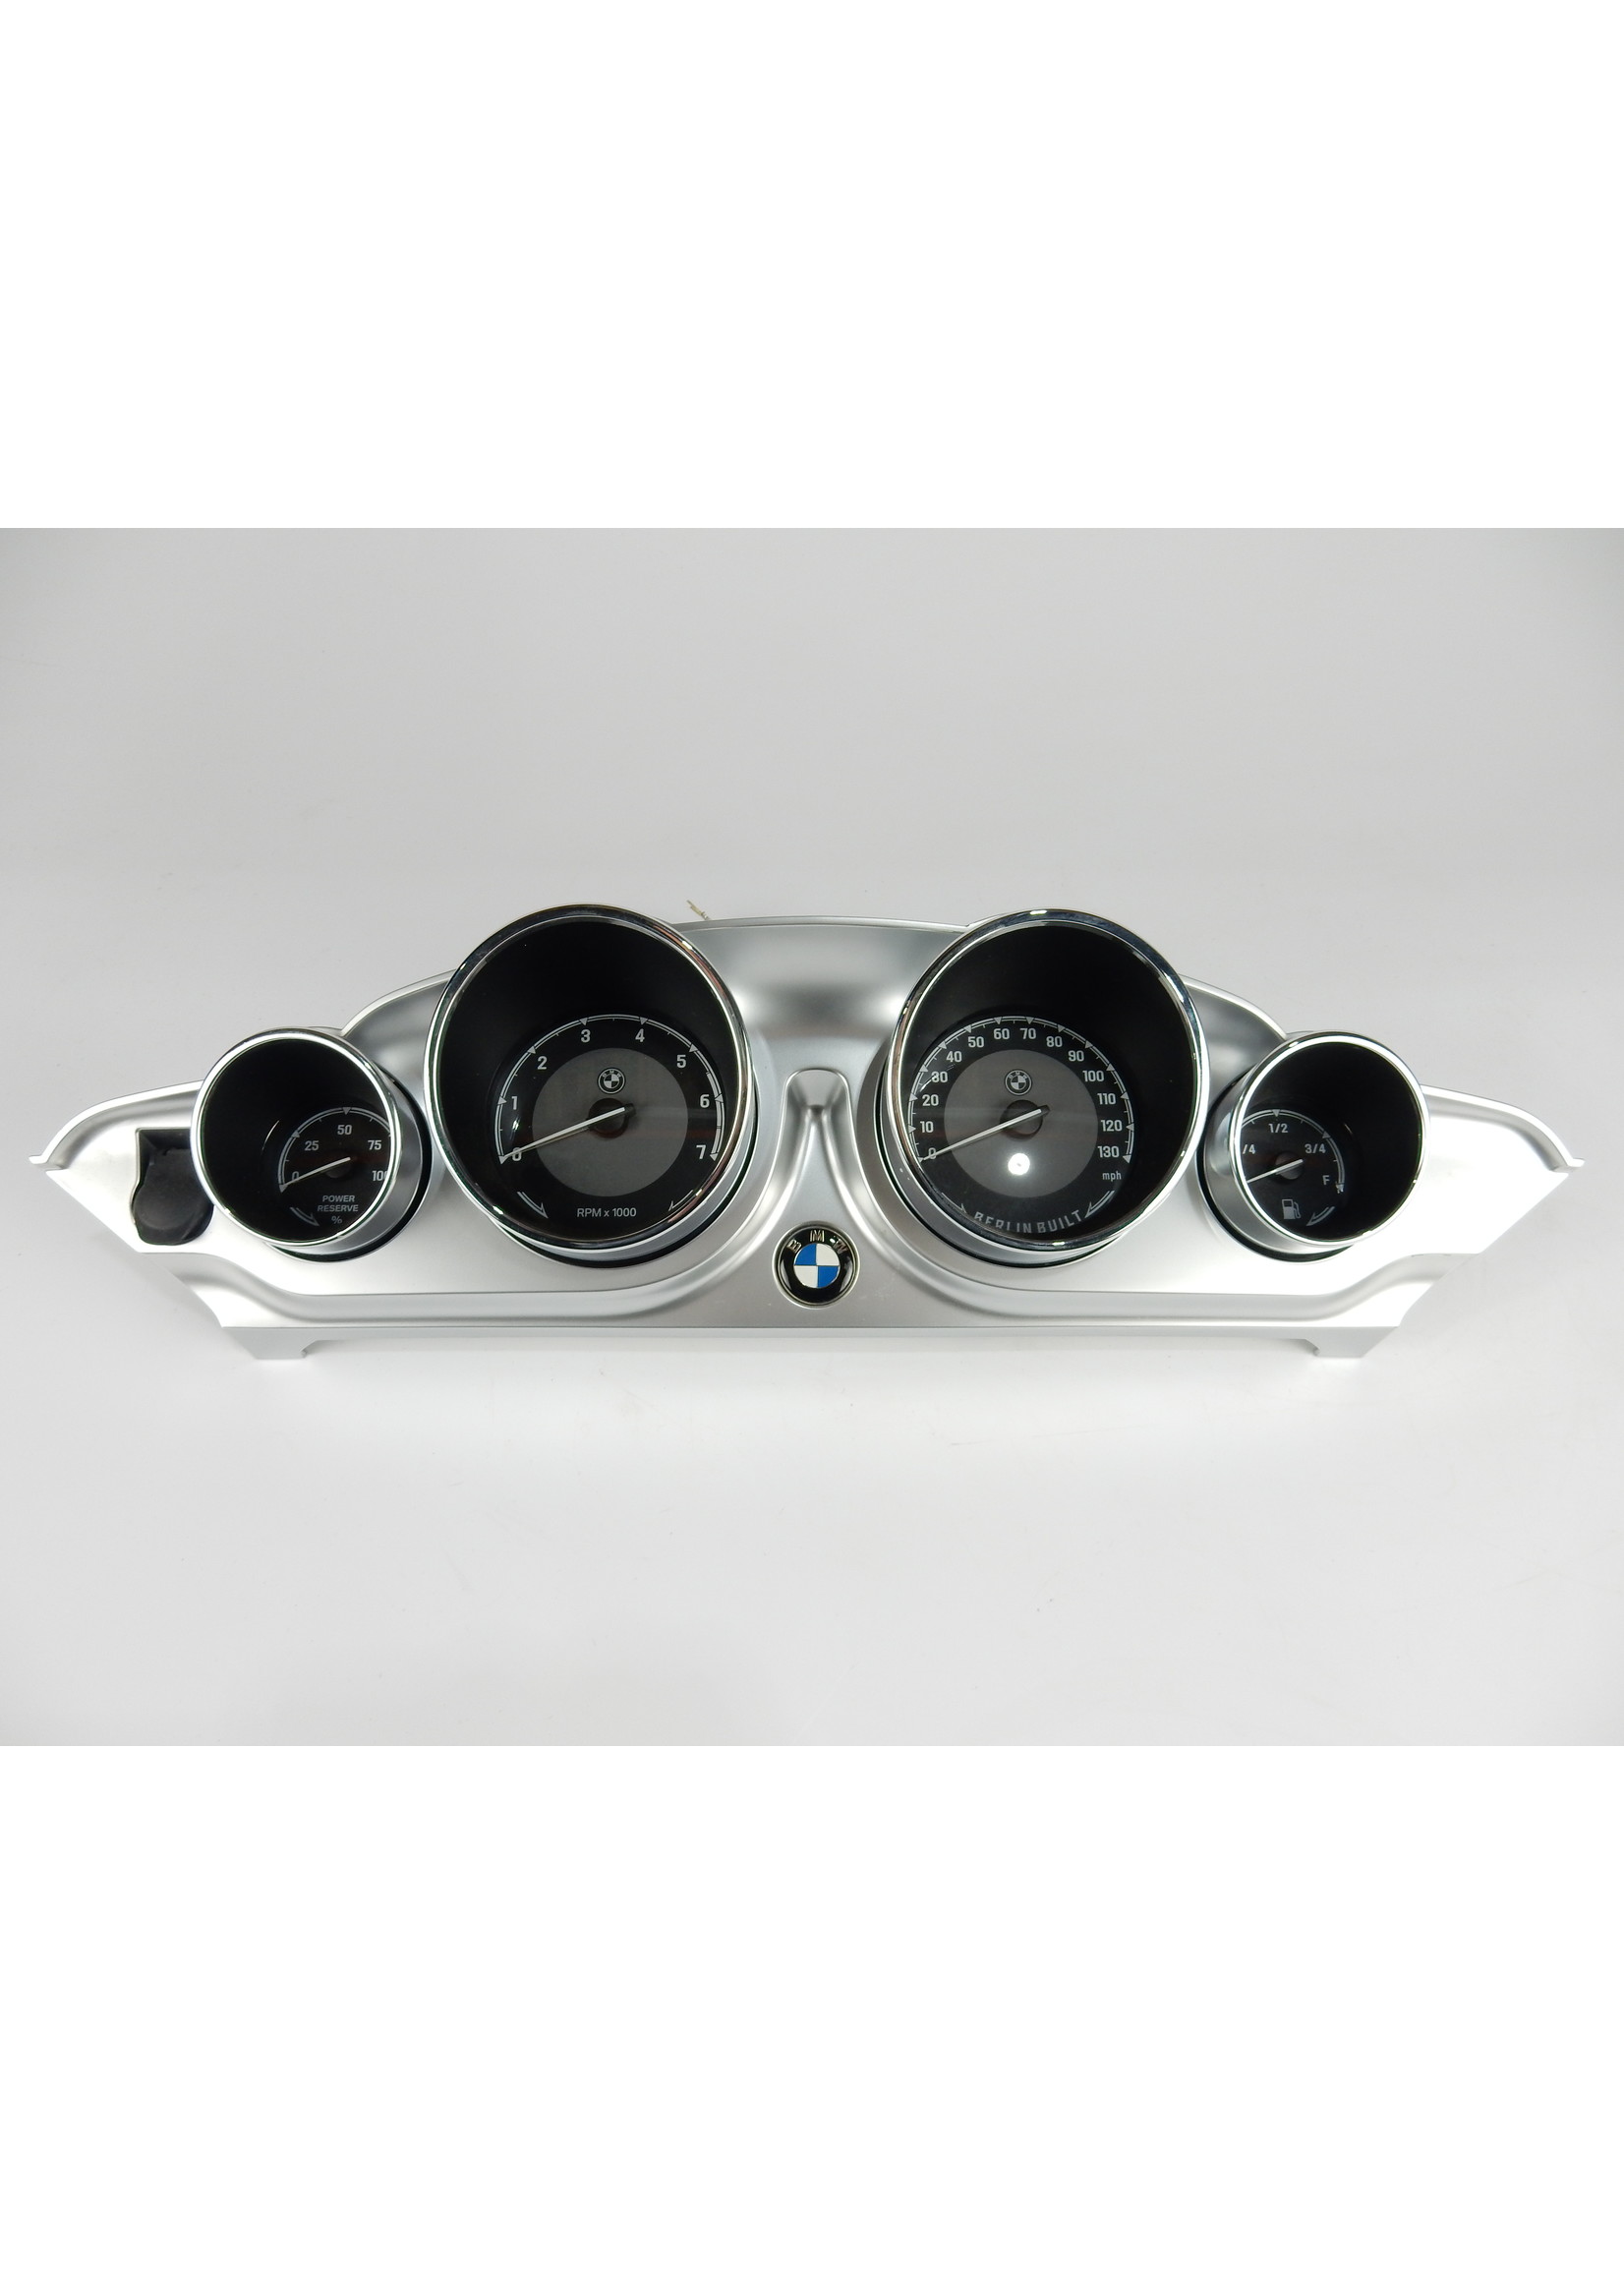 BMW BMW R18 B Transcontinental US Instrument panel CHROME / Revolution counter / Fuel level indicator / Power reserve display / 46639829082 / 62119480498 / 62119480499 / 62119480500